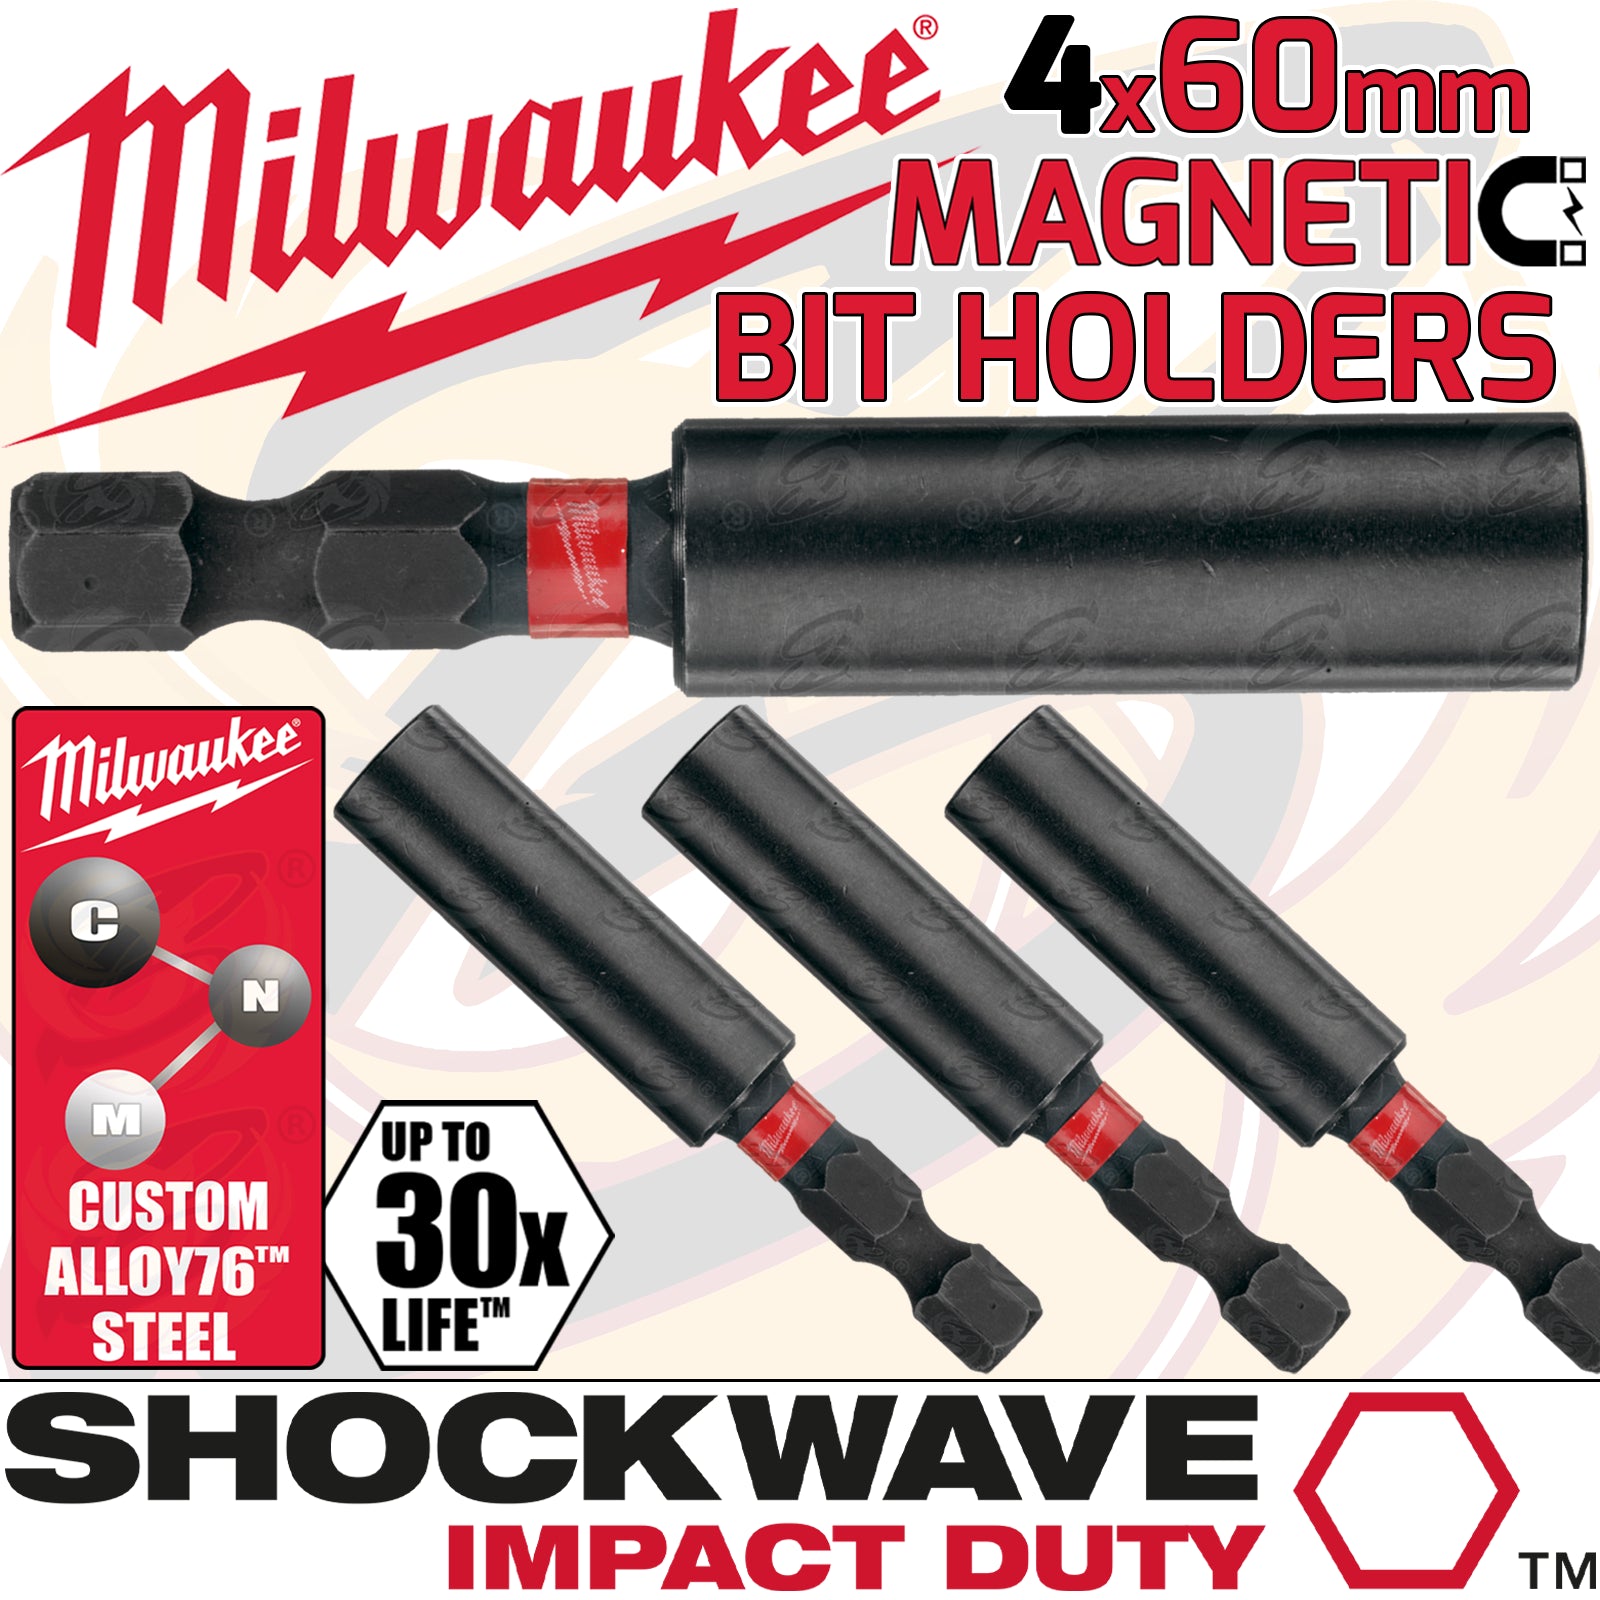 MILWAUKEE 60MM MAGNETIC BIT HOLDER ( SHOCKWAVE IMPACT DUTY ) ( X 4 )